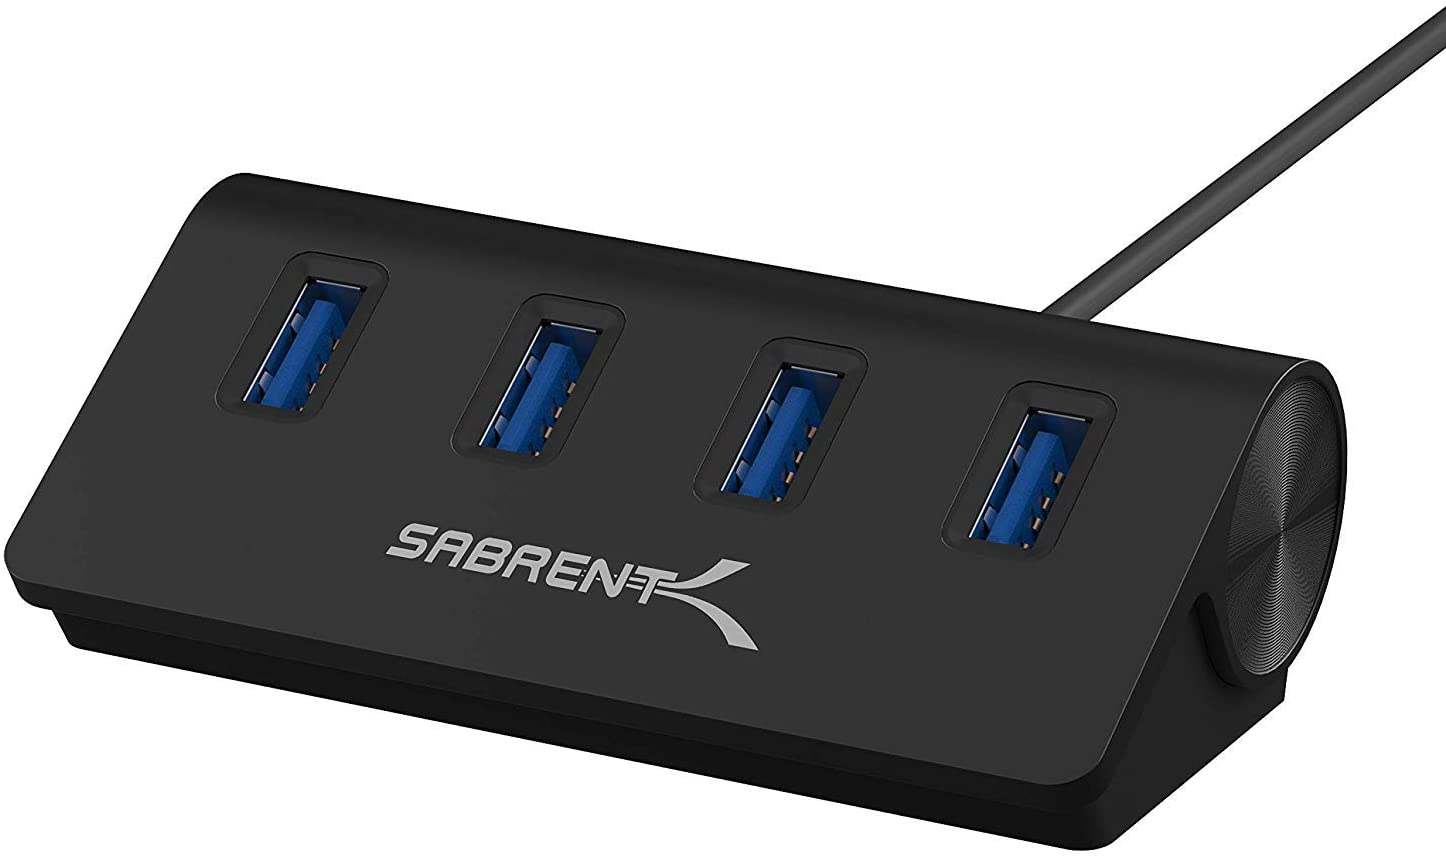 SABRENT 4-Port USB 3.0 Hub Aluminum Portable Data Hub with 2.5ft USB 3.0 Cable for iMac, MacBook, MacBook Pro, MacBook Air, Mac Mini, or Any PC [Black] (HB-MC3B)